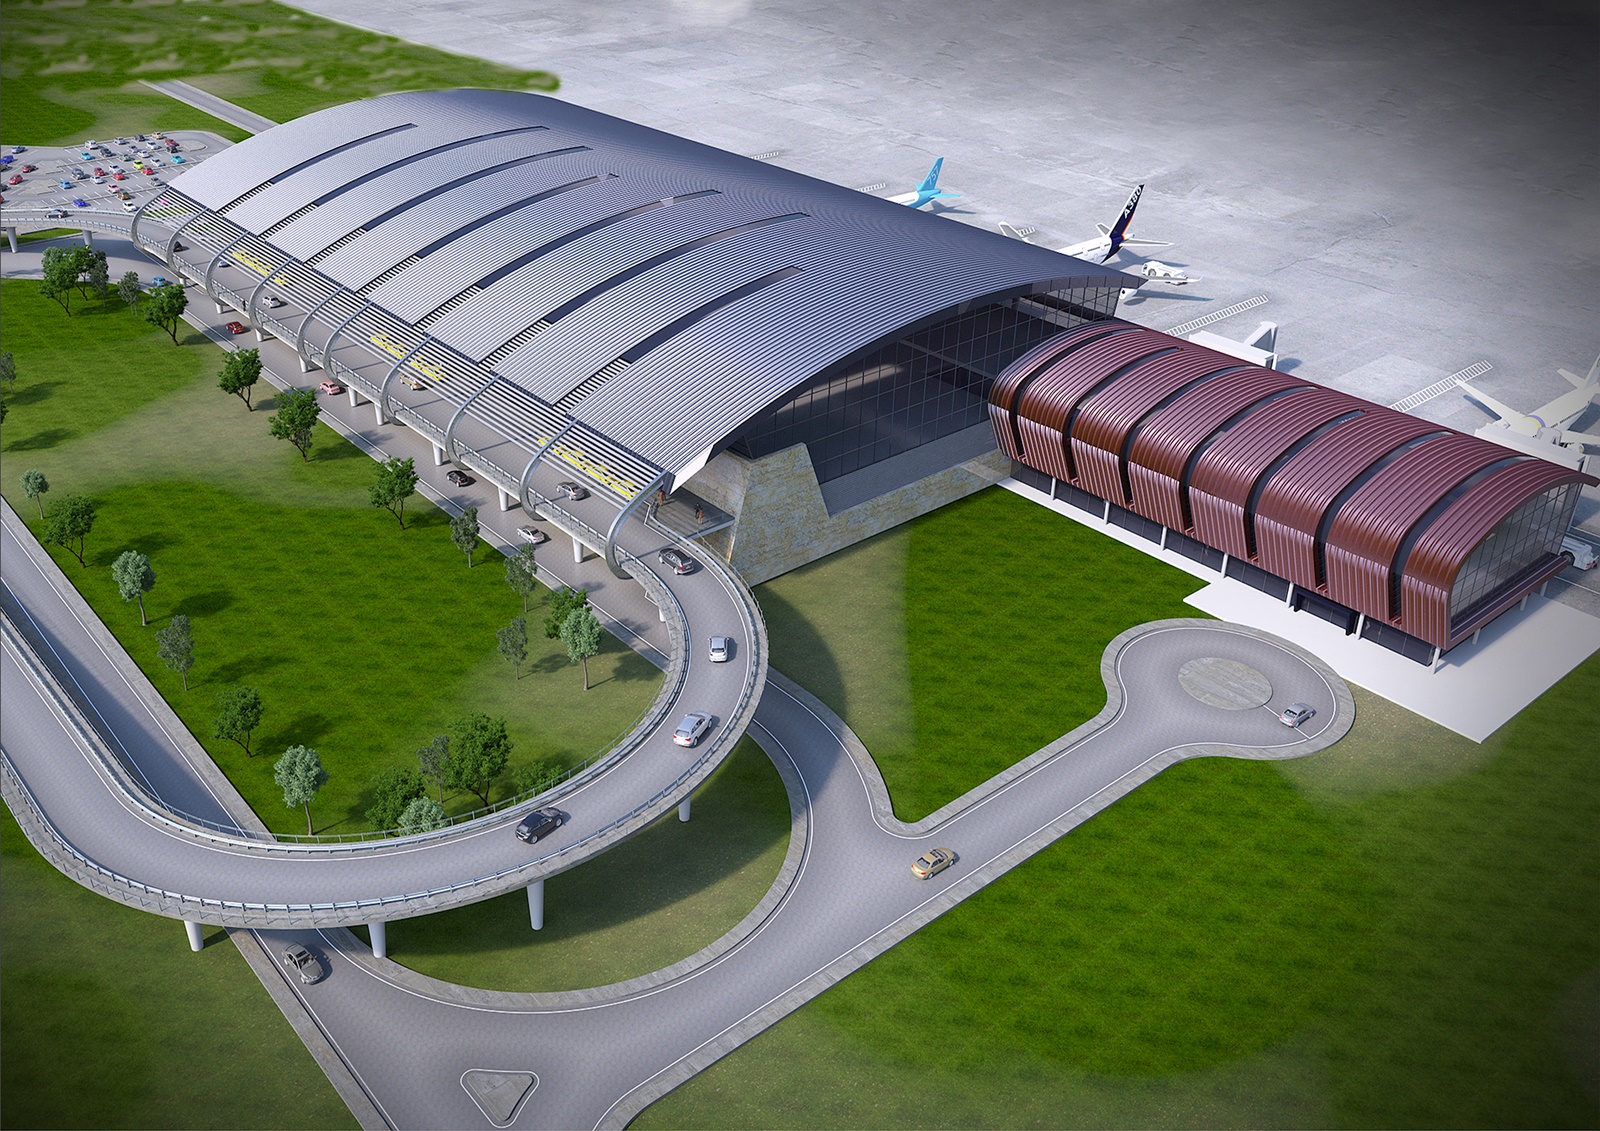 Kayseri New Airport